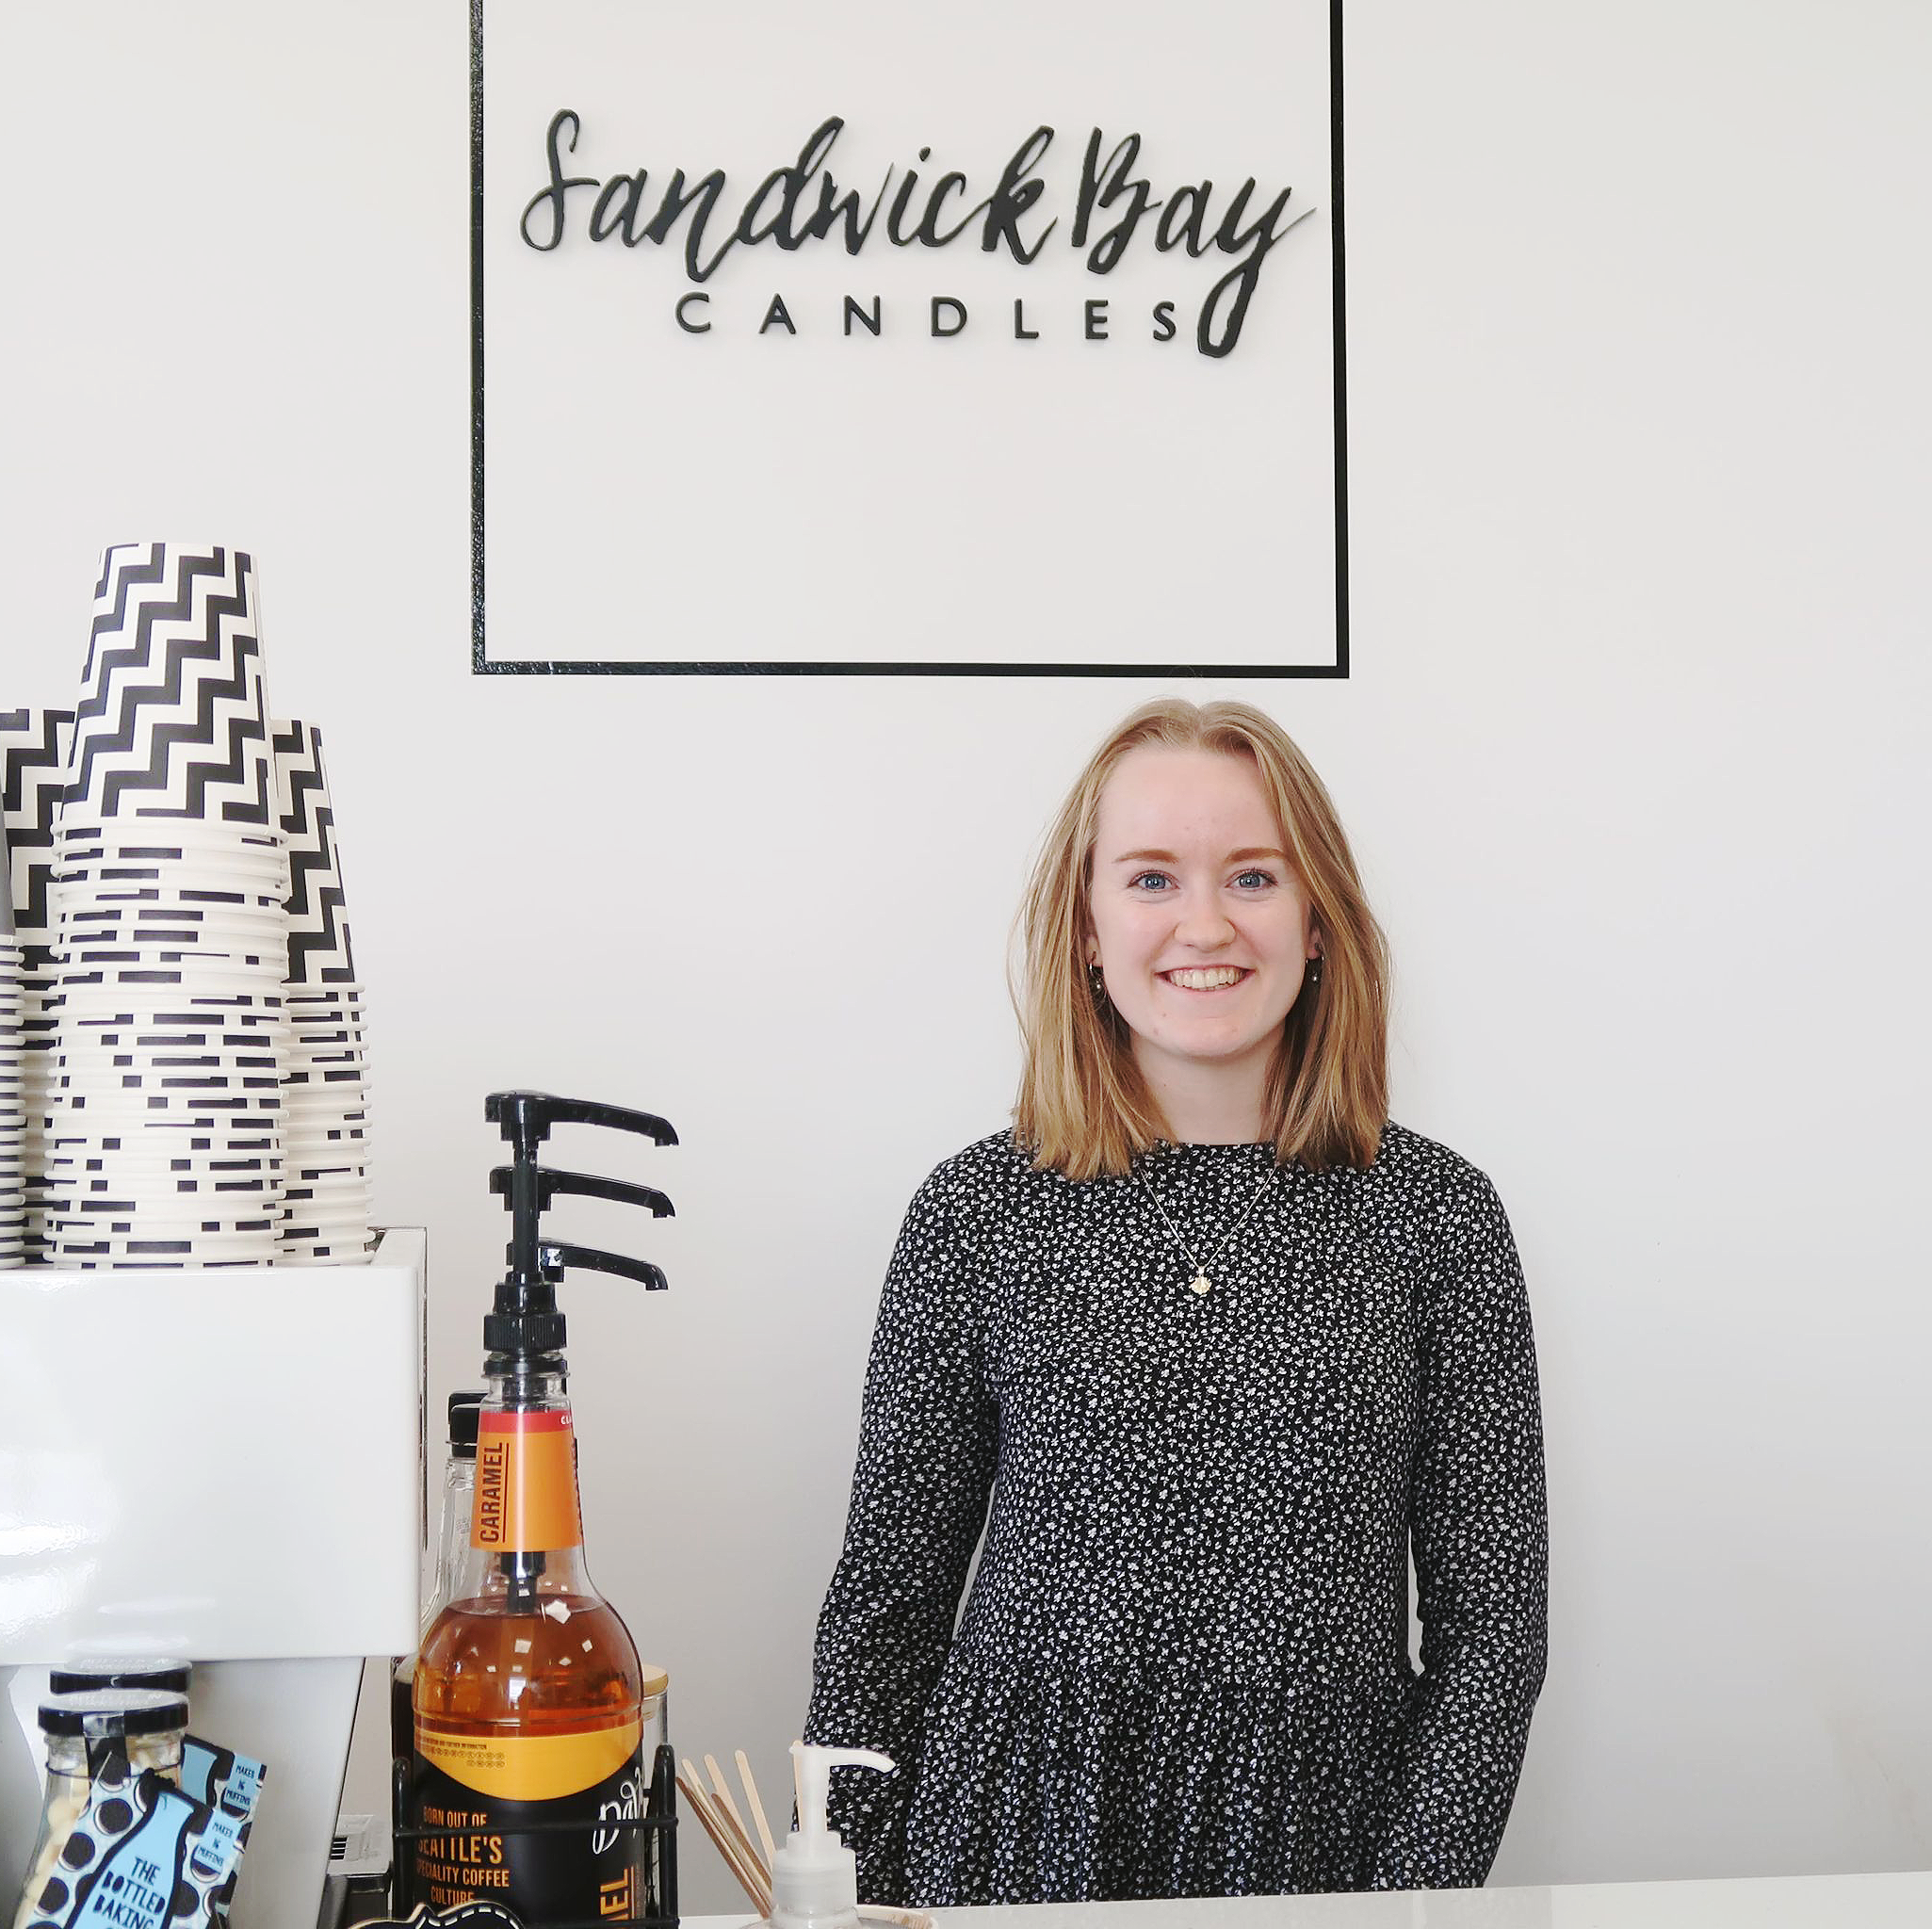 Sandwick Bay Candles